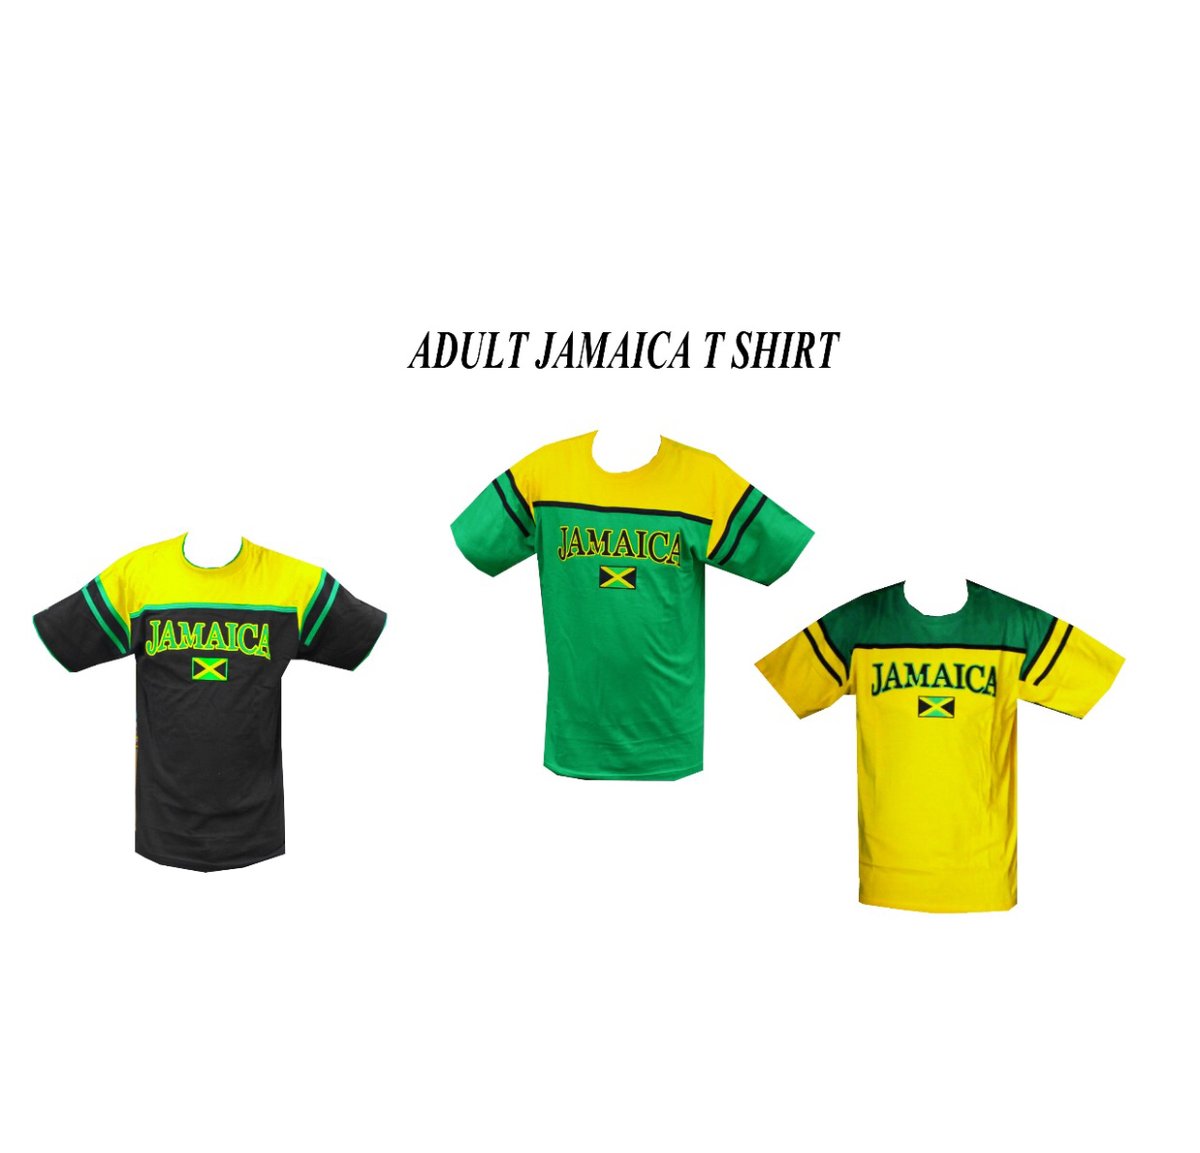 Jamaica shirts | Everything Jamaica